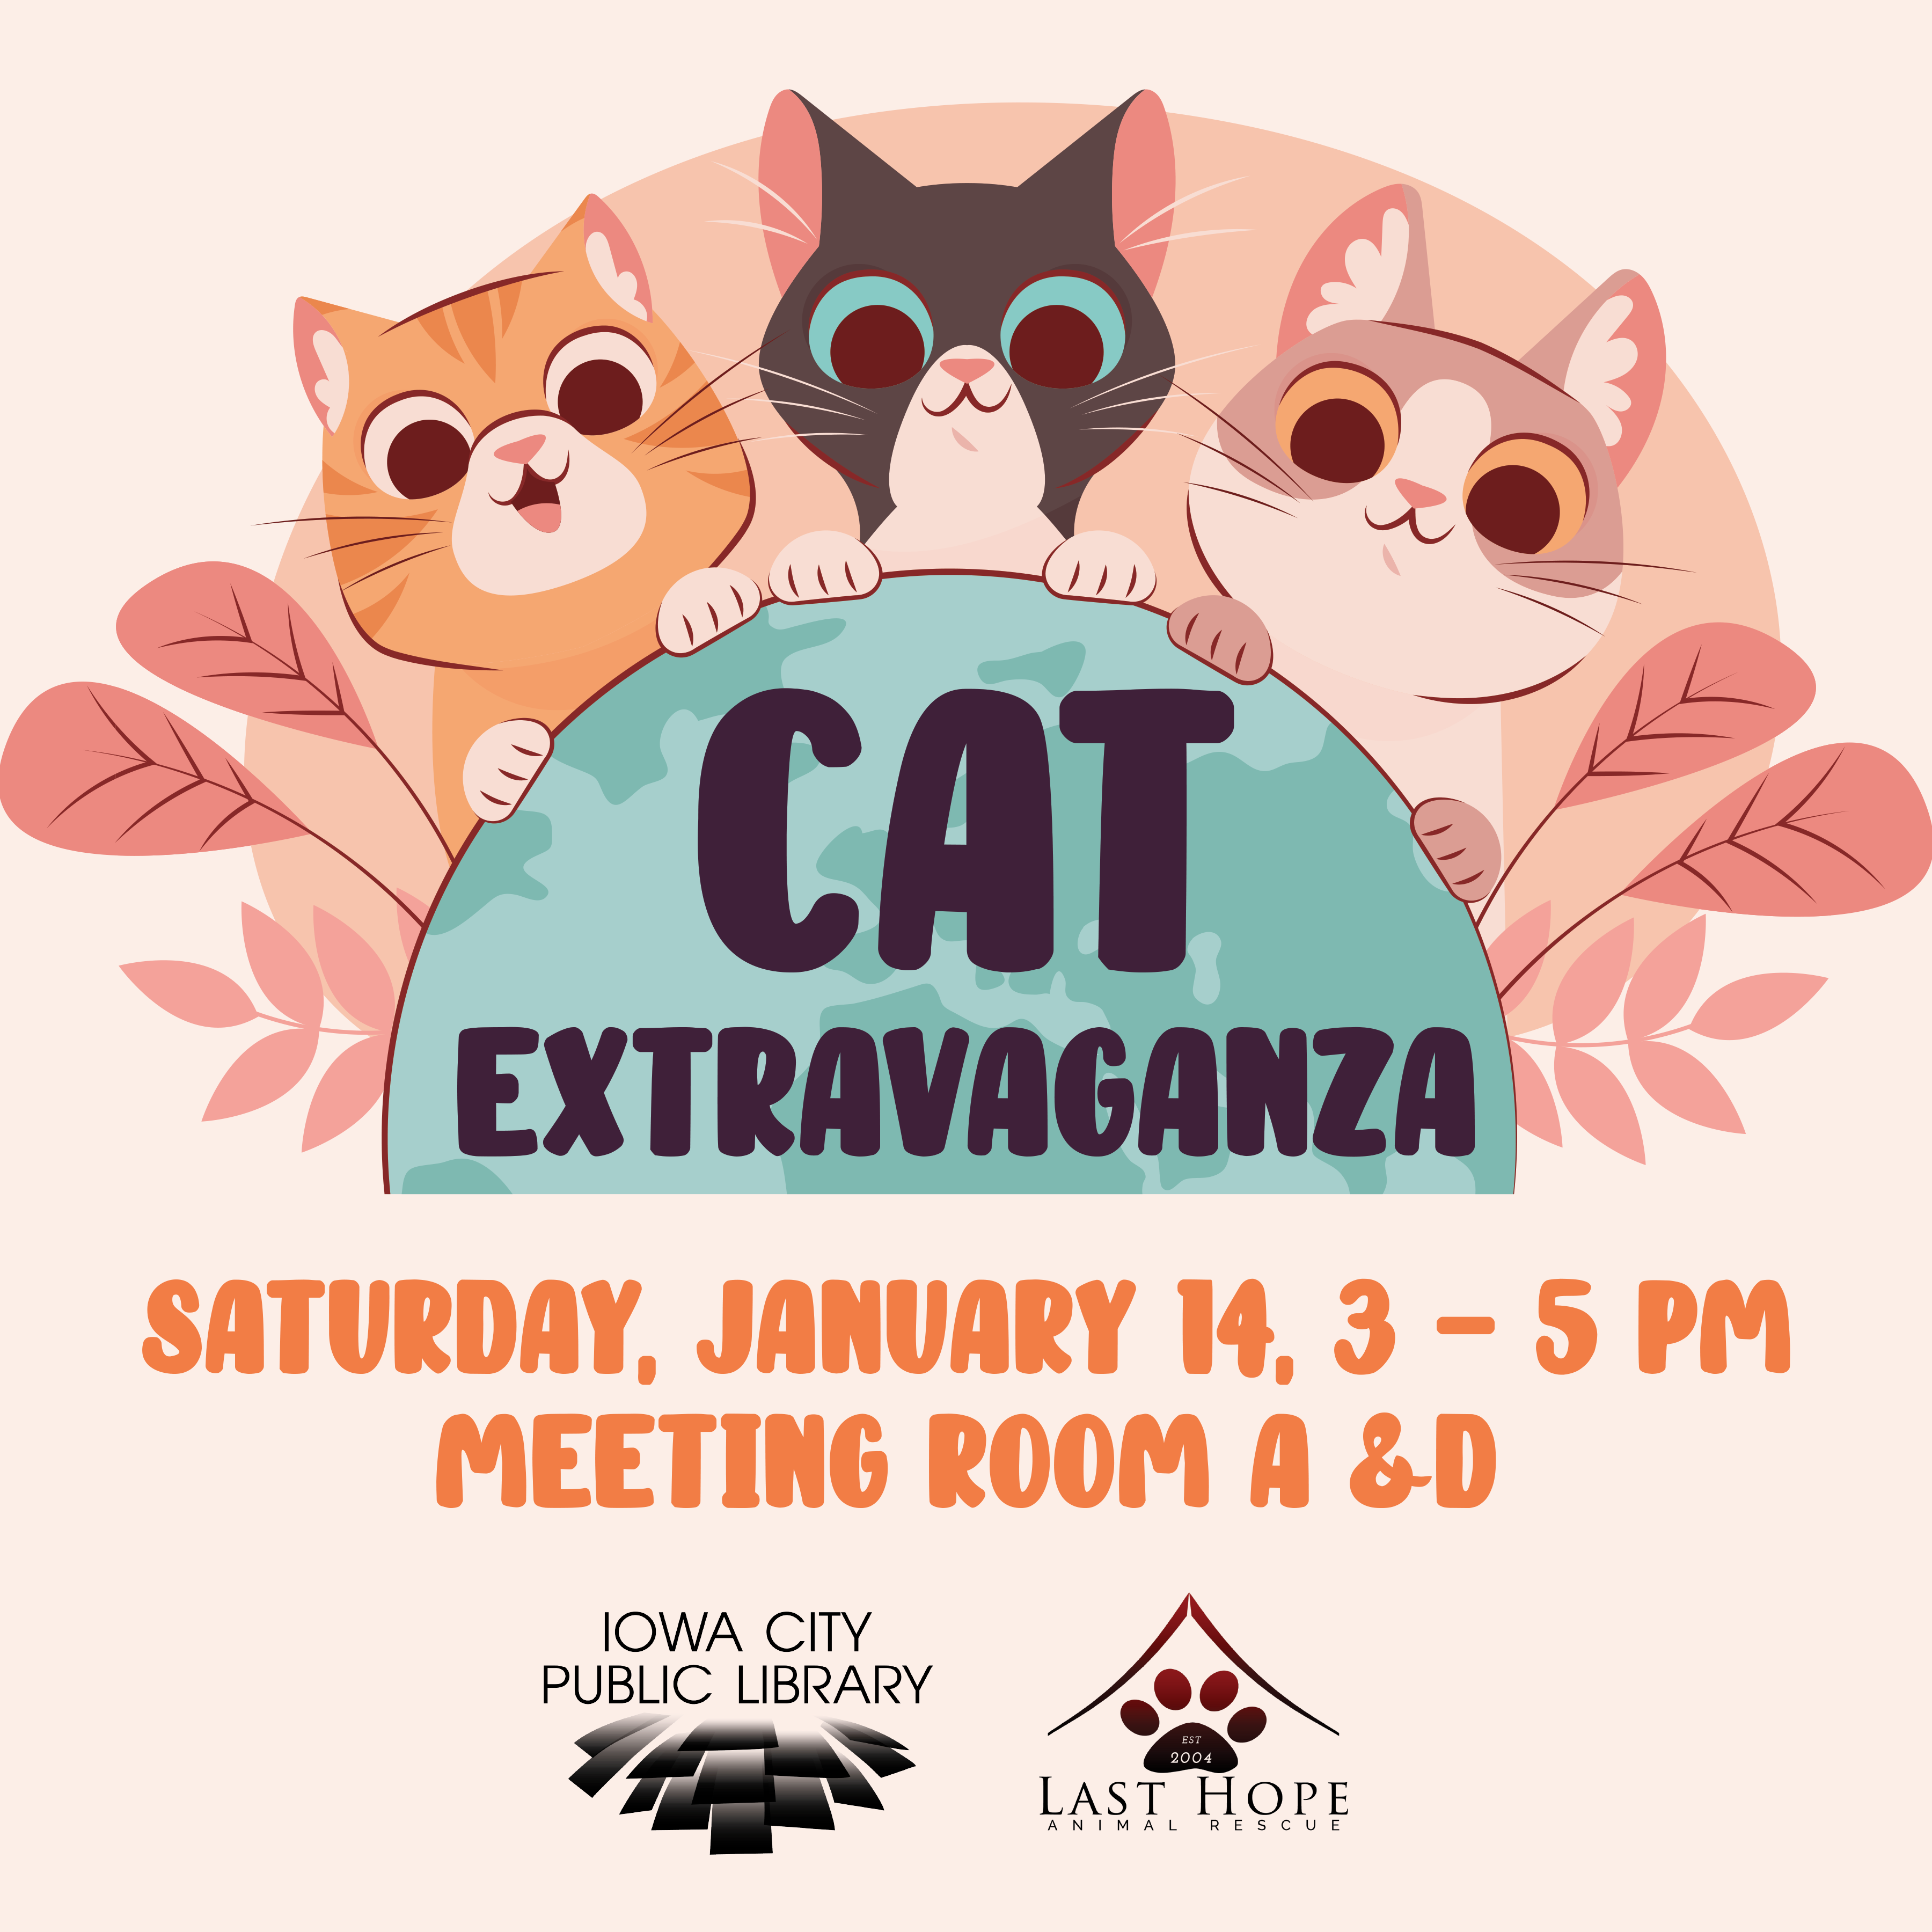 Cat Extravaganza Iowa City Public Library